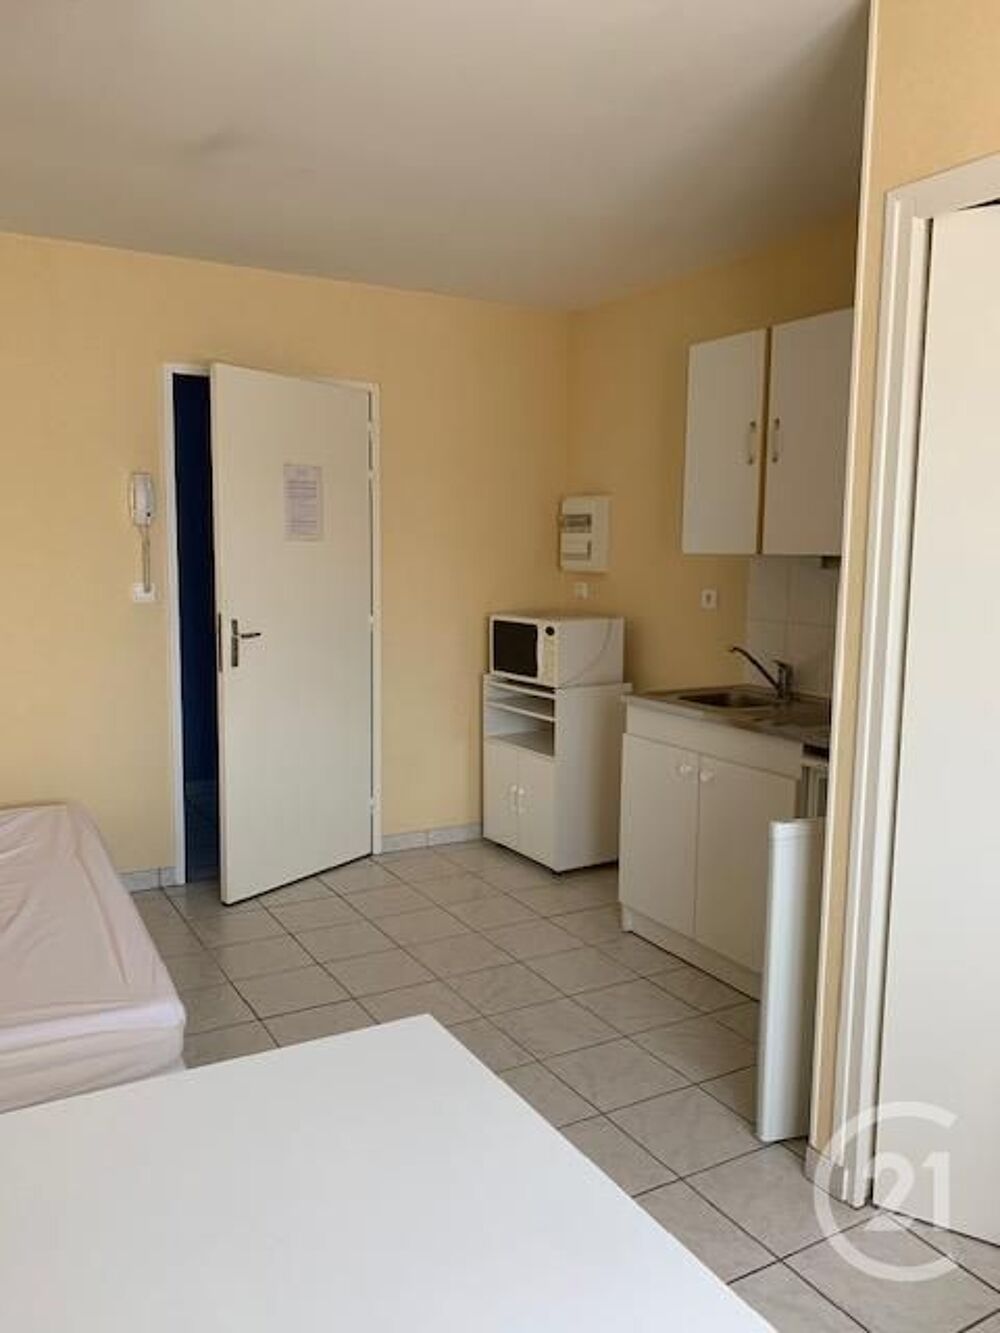 location Appartement - 1 pice(s) - 22 m Montluon (03100)